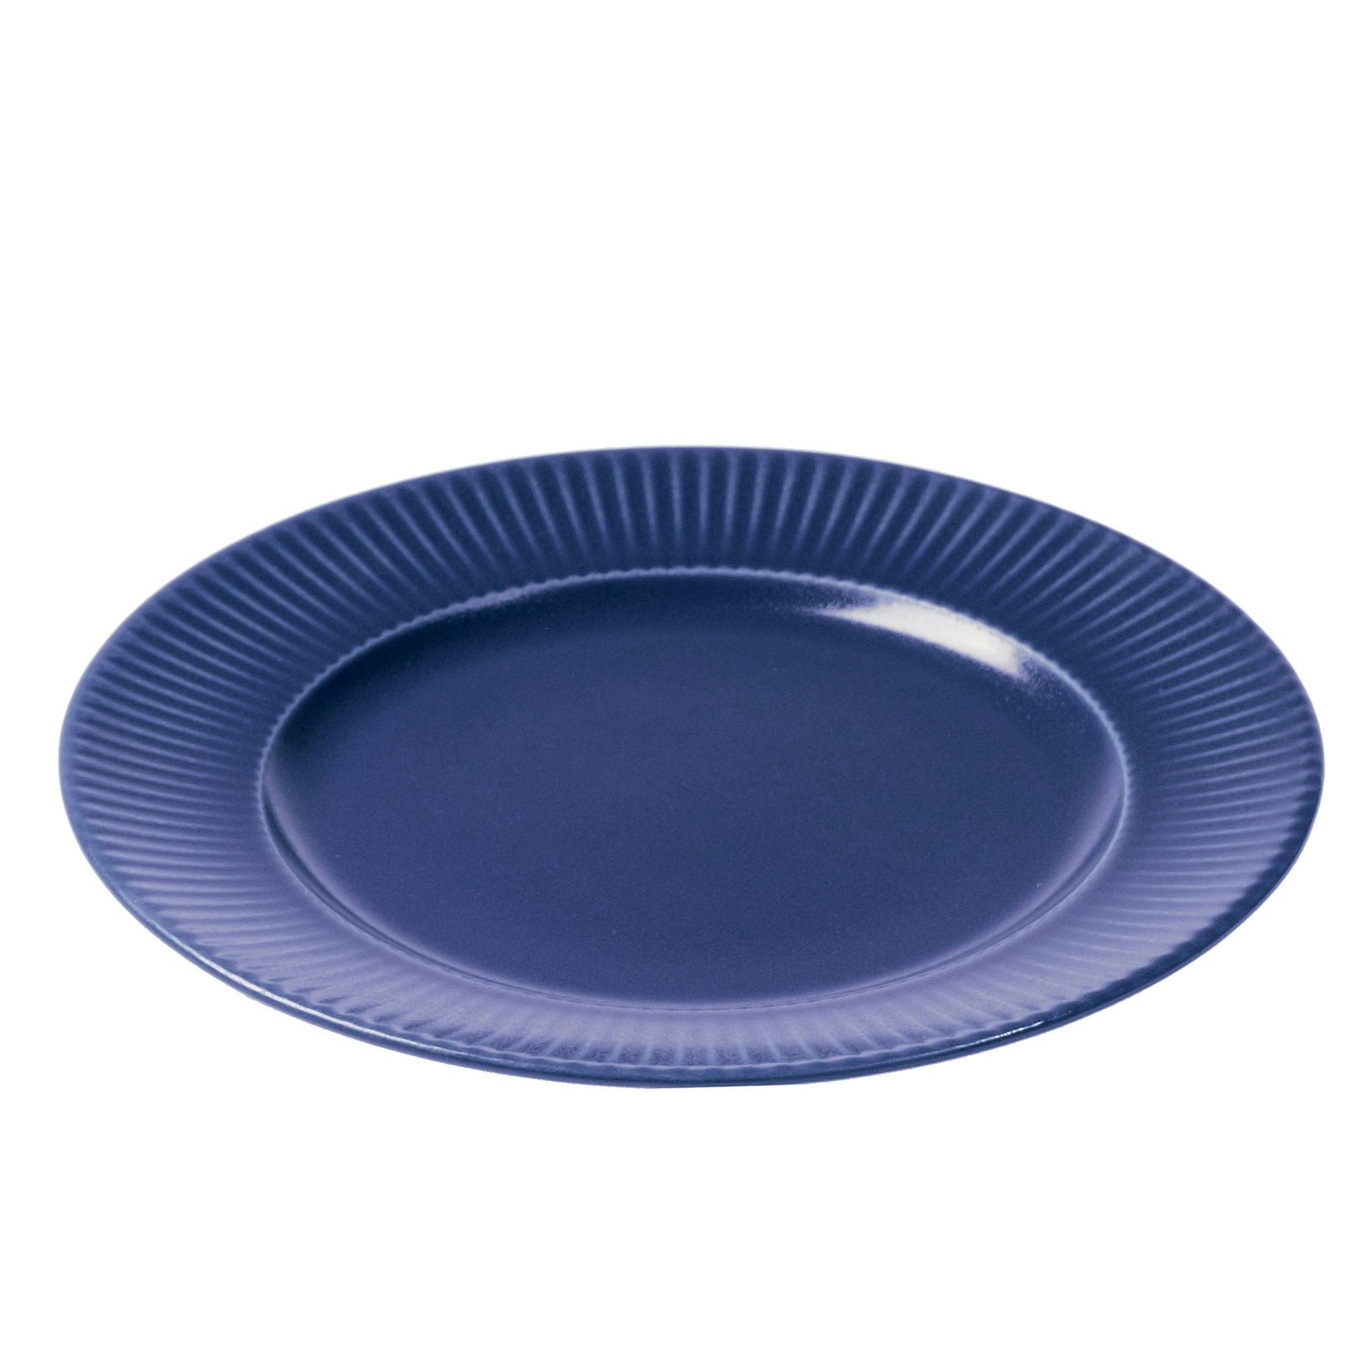 Groovy Dinner Plate, 27 cm